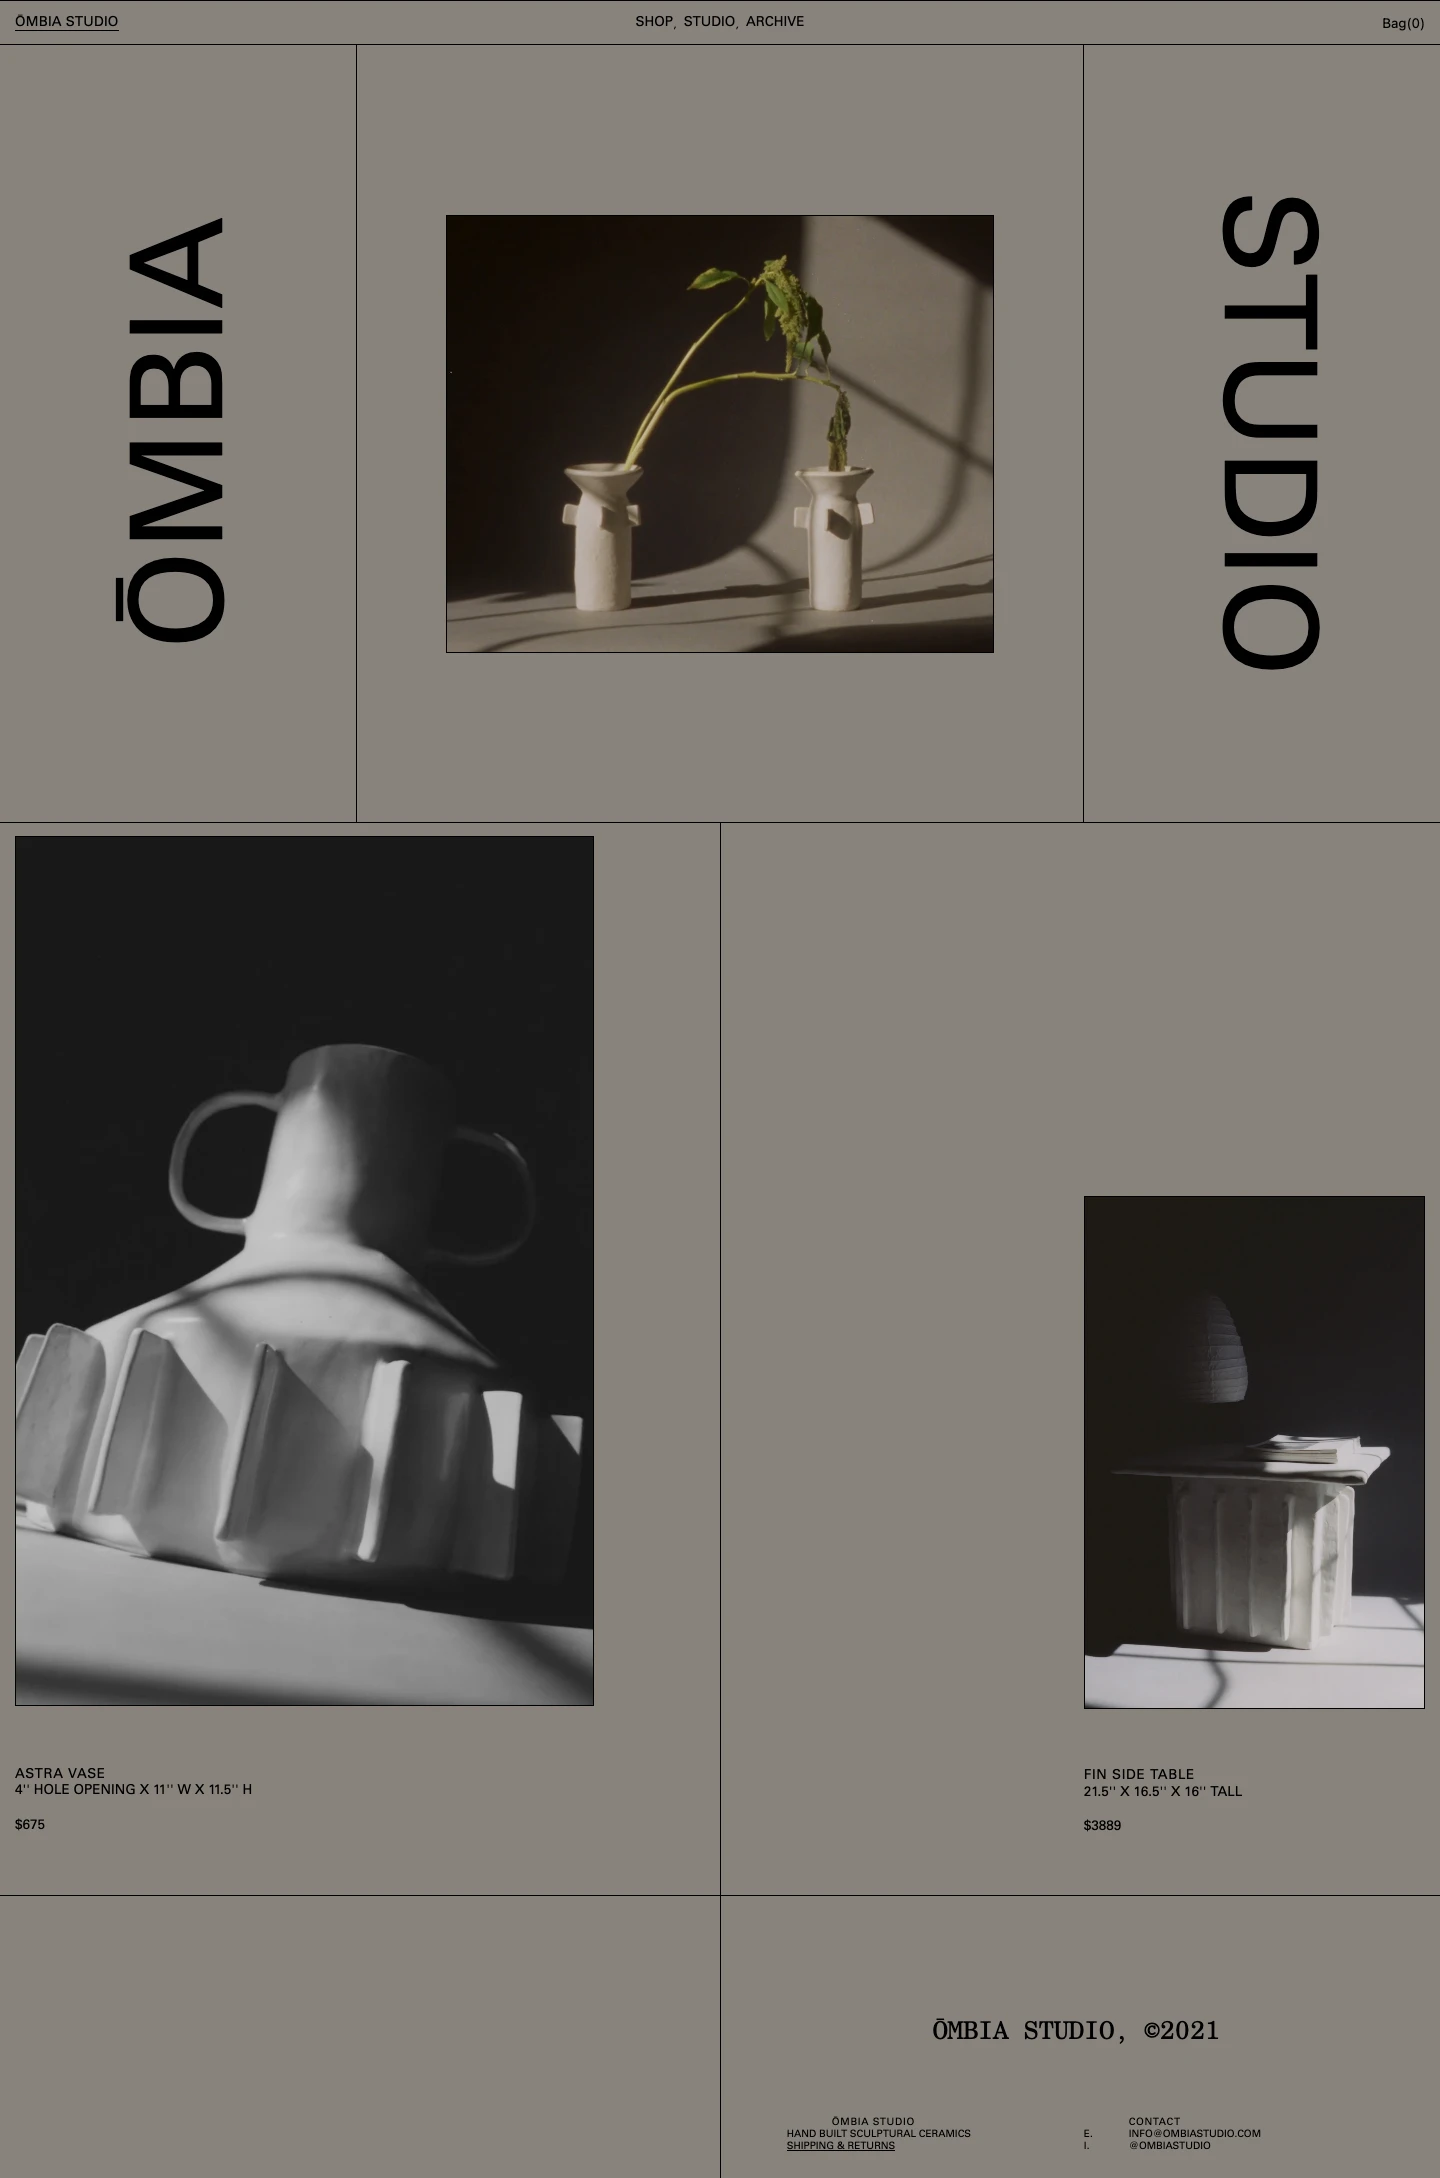 Ombia Studio Landing Page Example: Hand built sculptural ceramics and design studio.